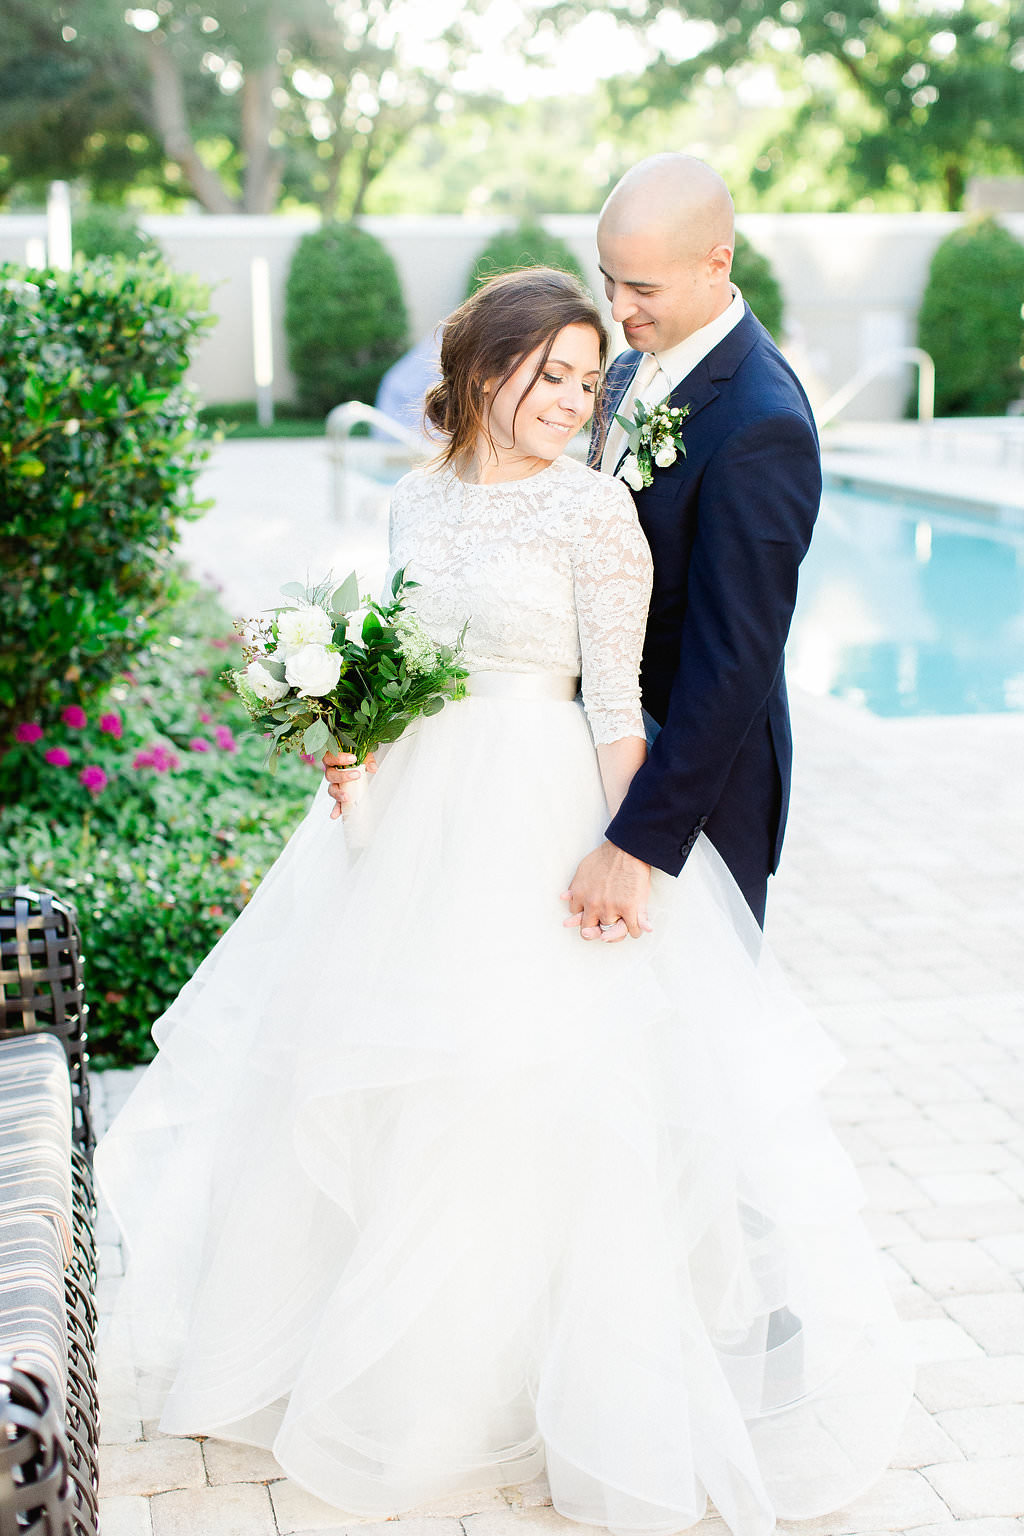 Tampa Bay Bride and Groom Outdoor Wedding Portrait by Pool | South Tampa Boutique Wedding Venue the Epicurean Hotel